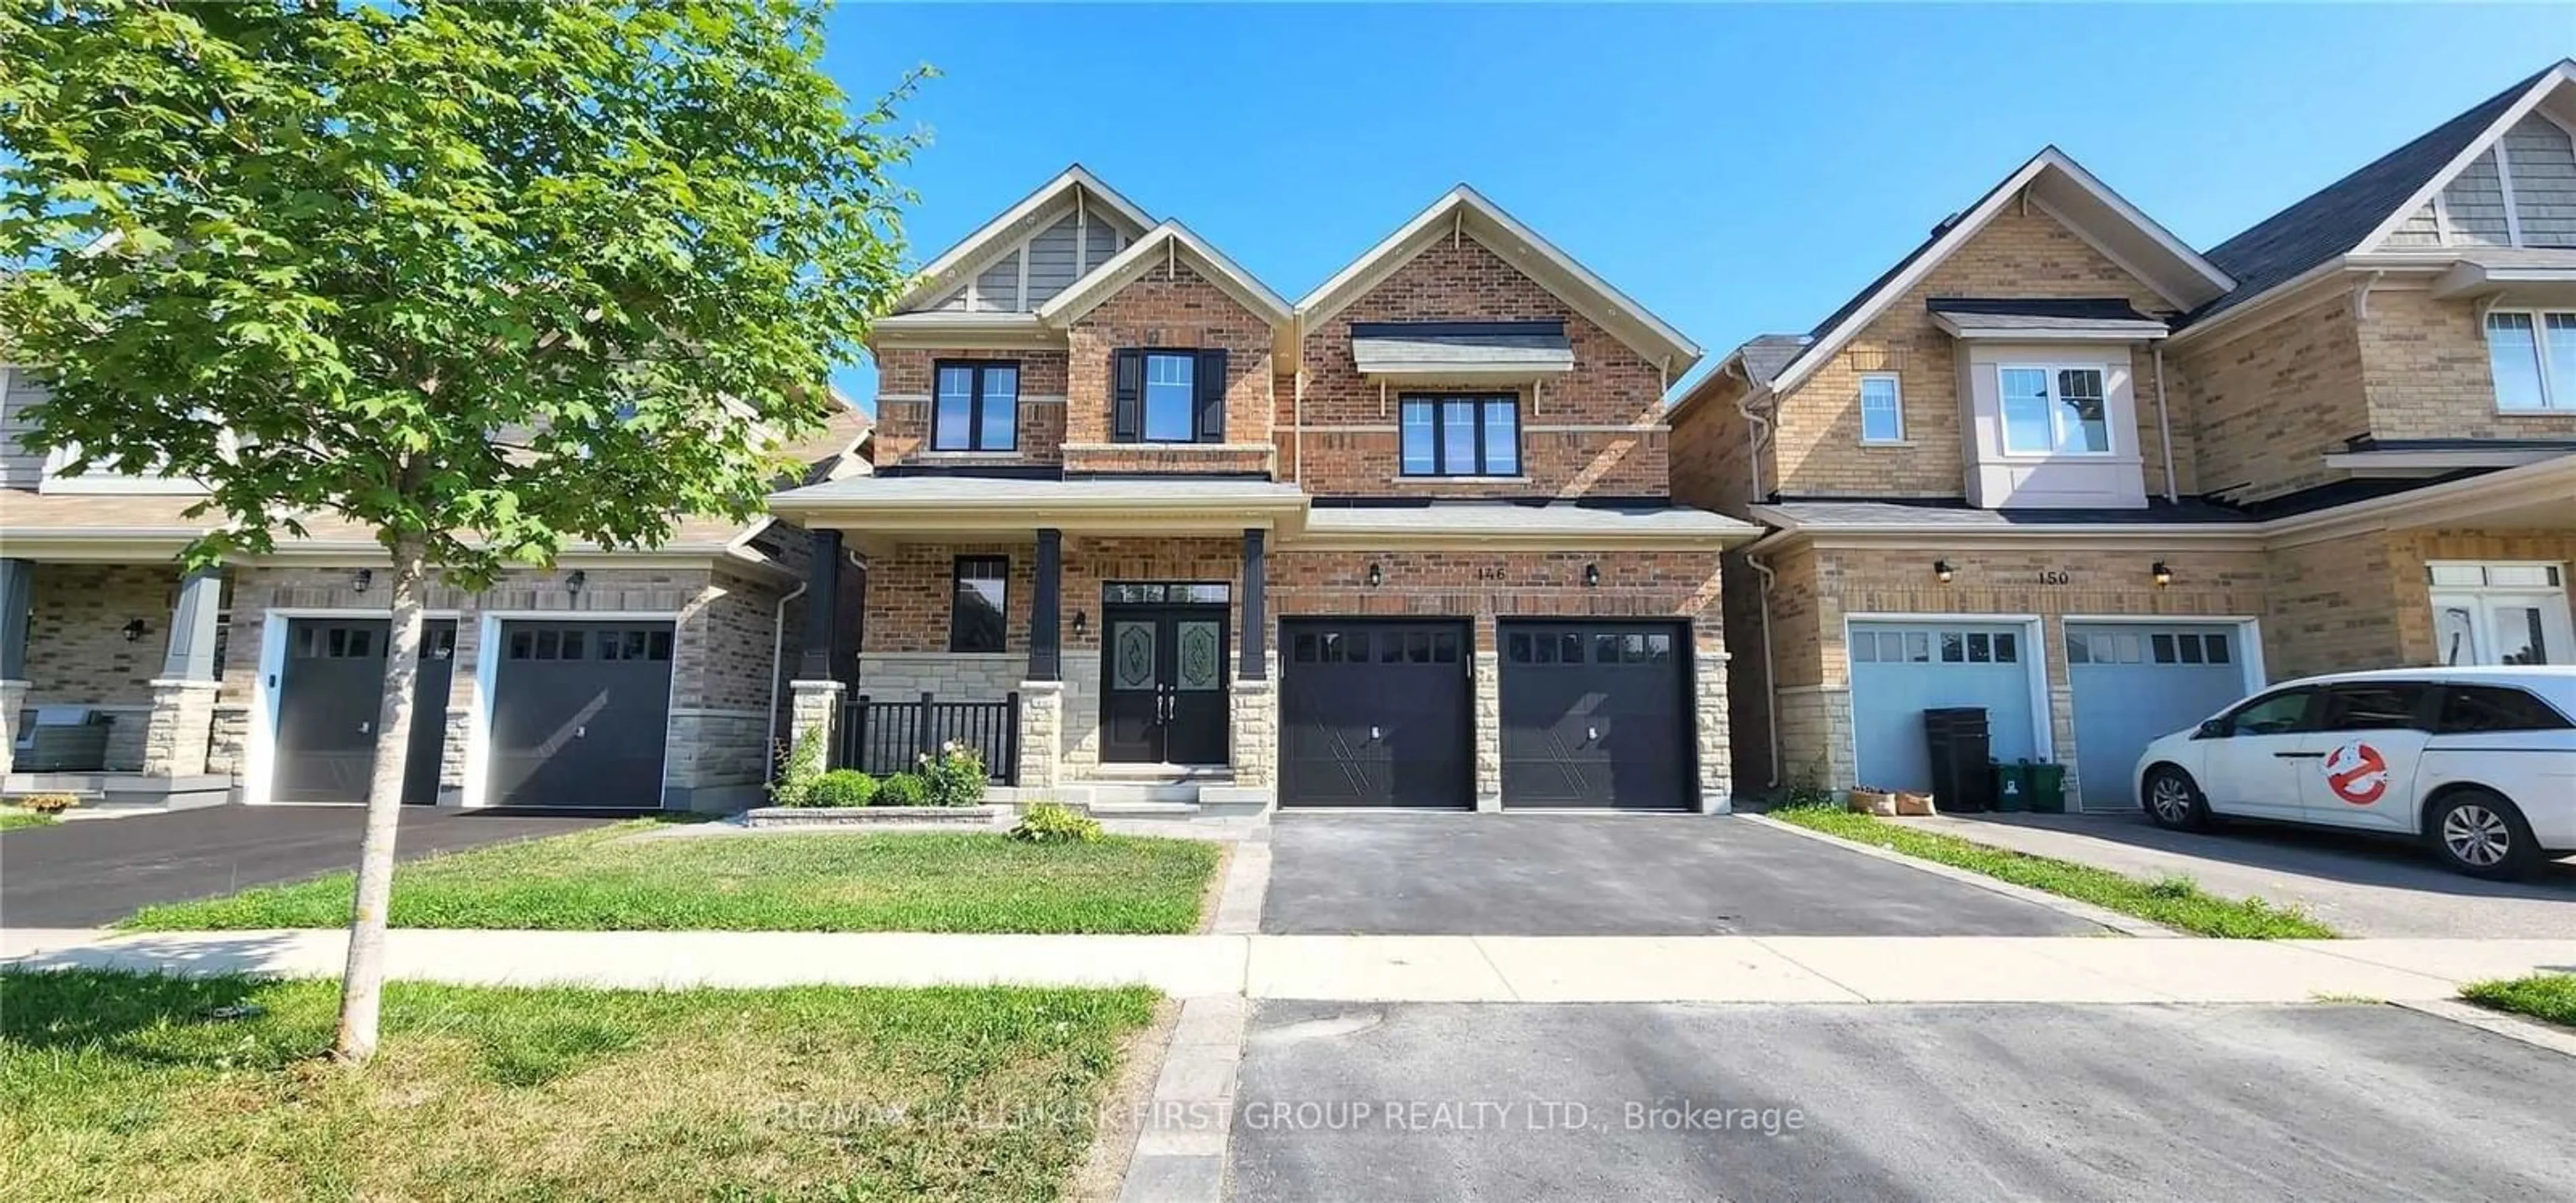 Home with brick exterior material for 146 Britannia Ave, Oshawa Ontario L1L 0C1